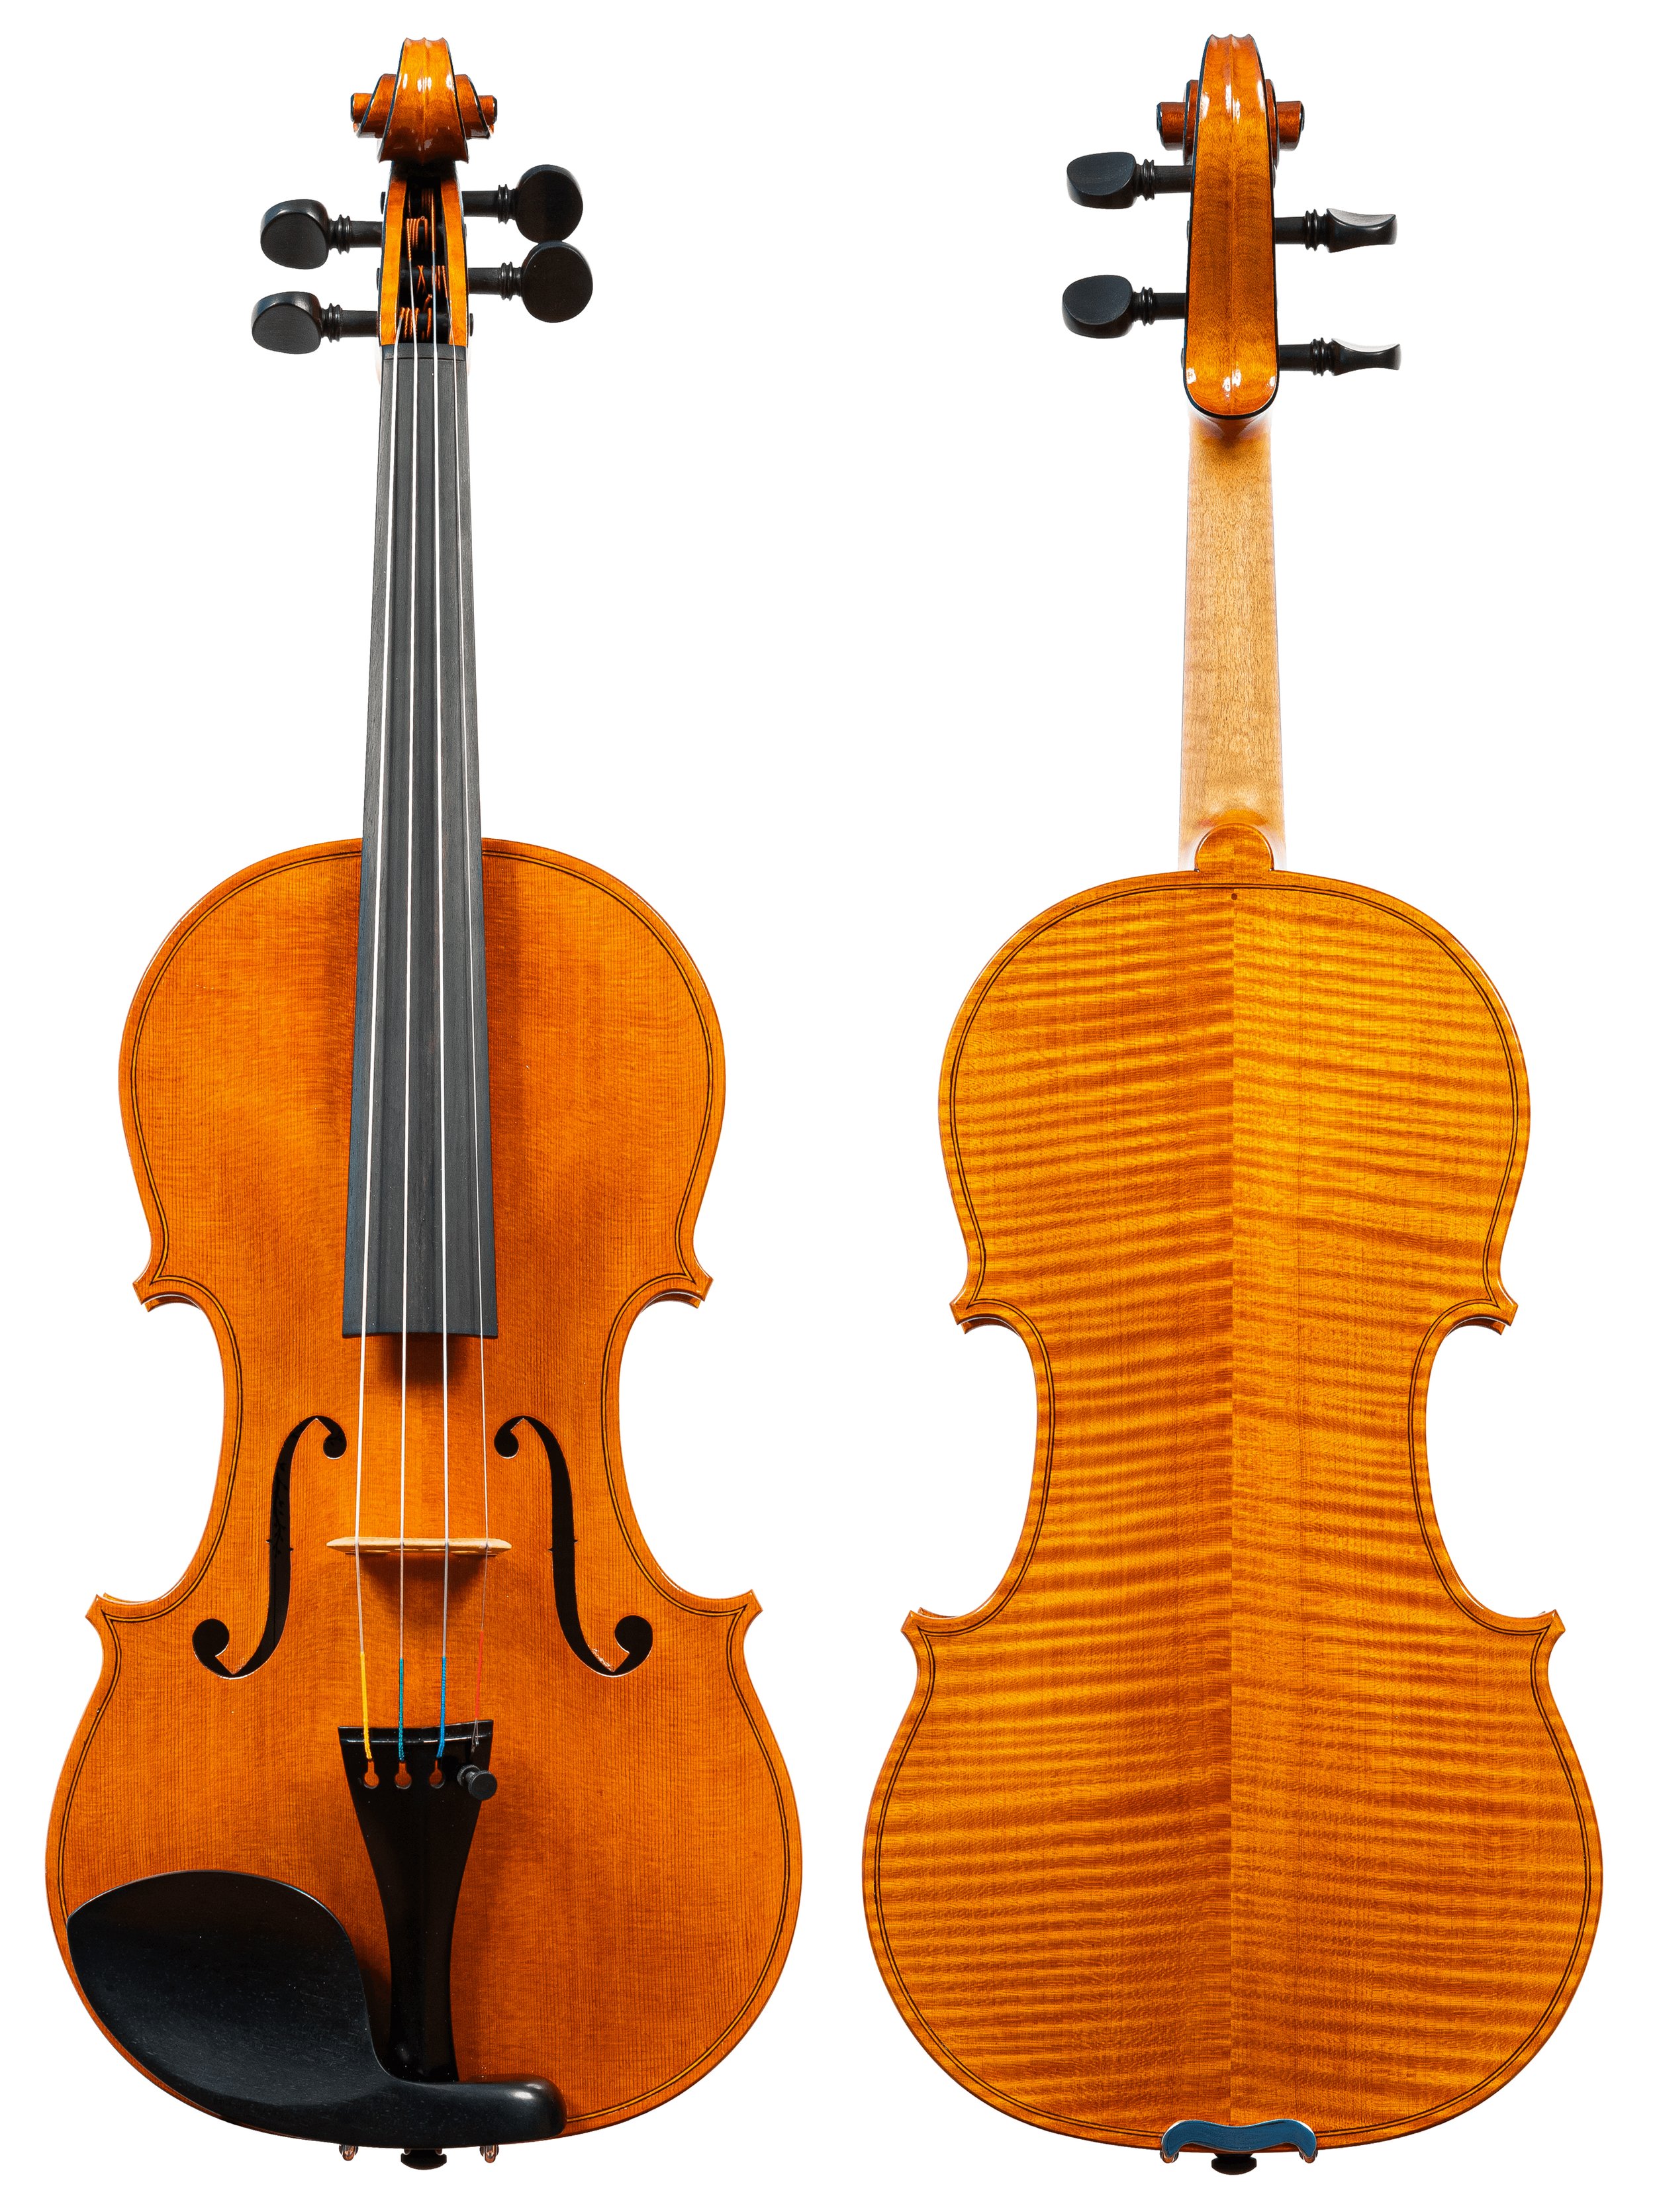 Michael Kijowski, Violin, Chicago 2022